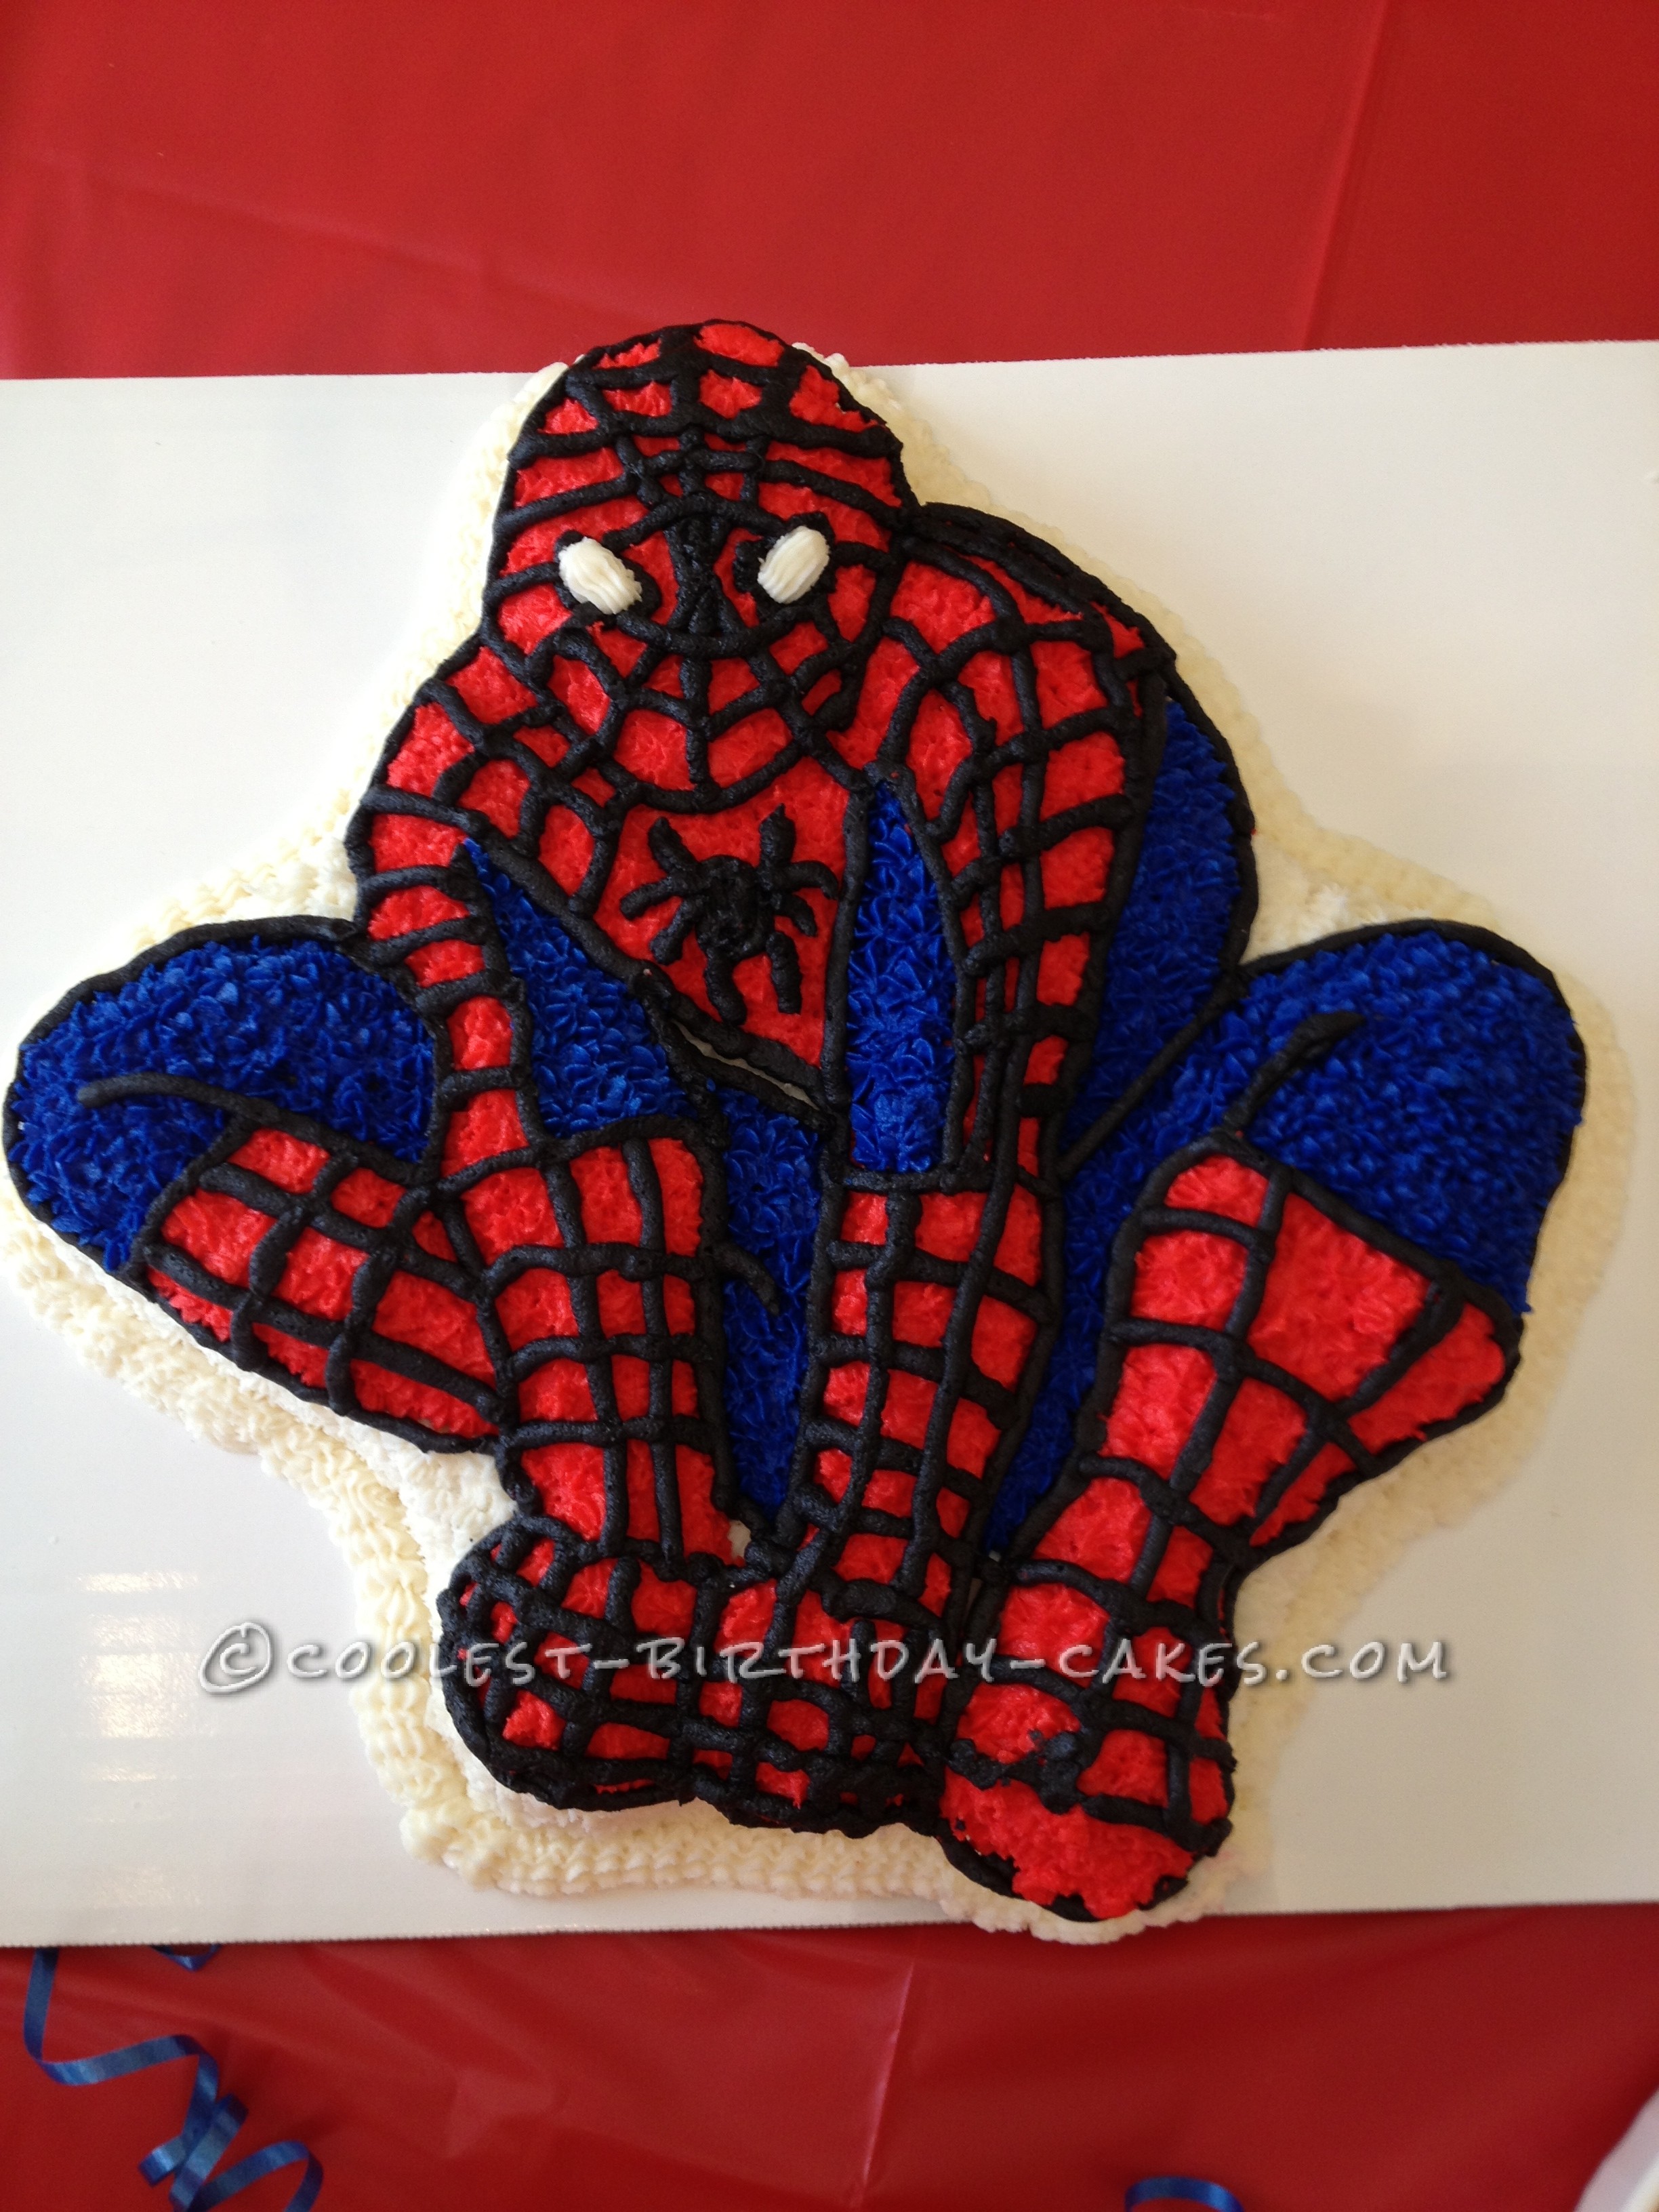 Spiderman Birthday Cake Using the Wilton Cake Pan